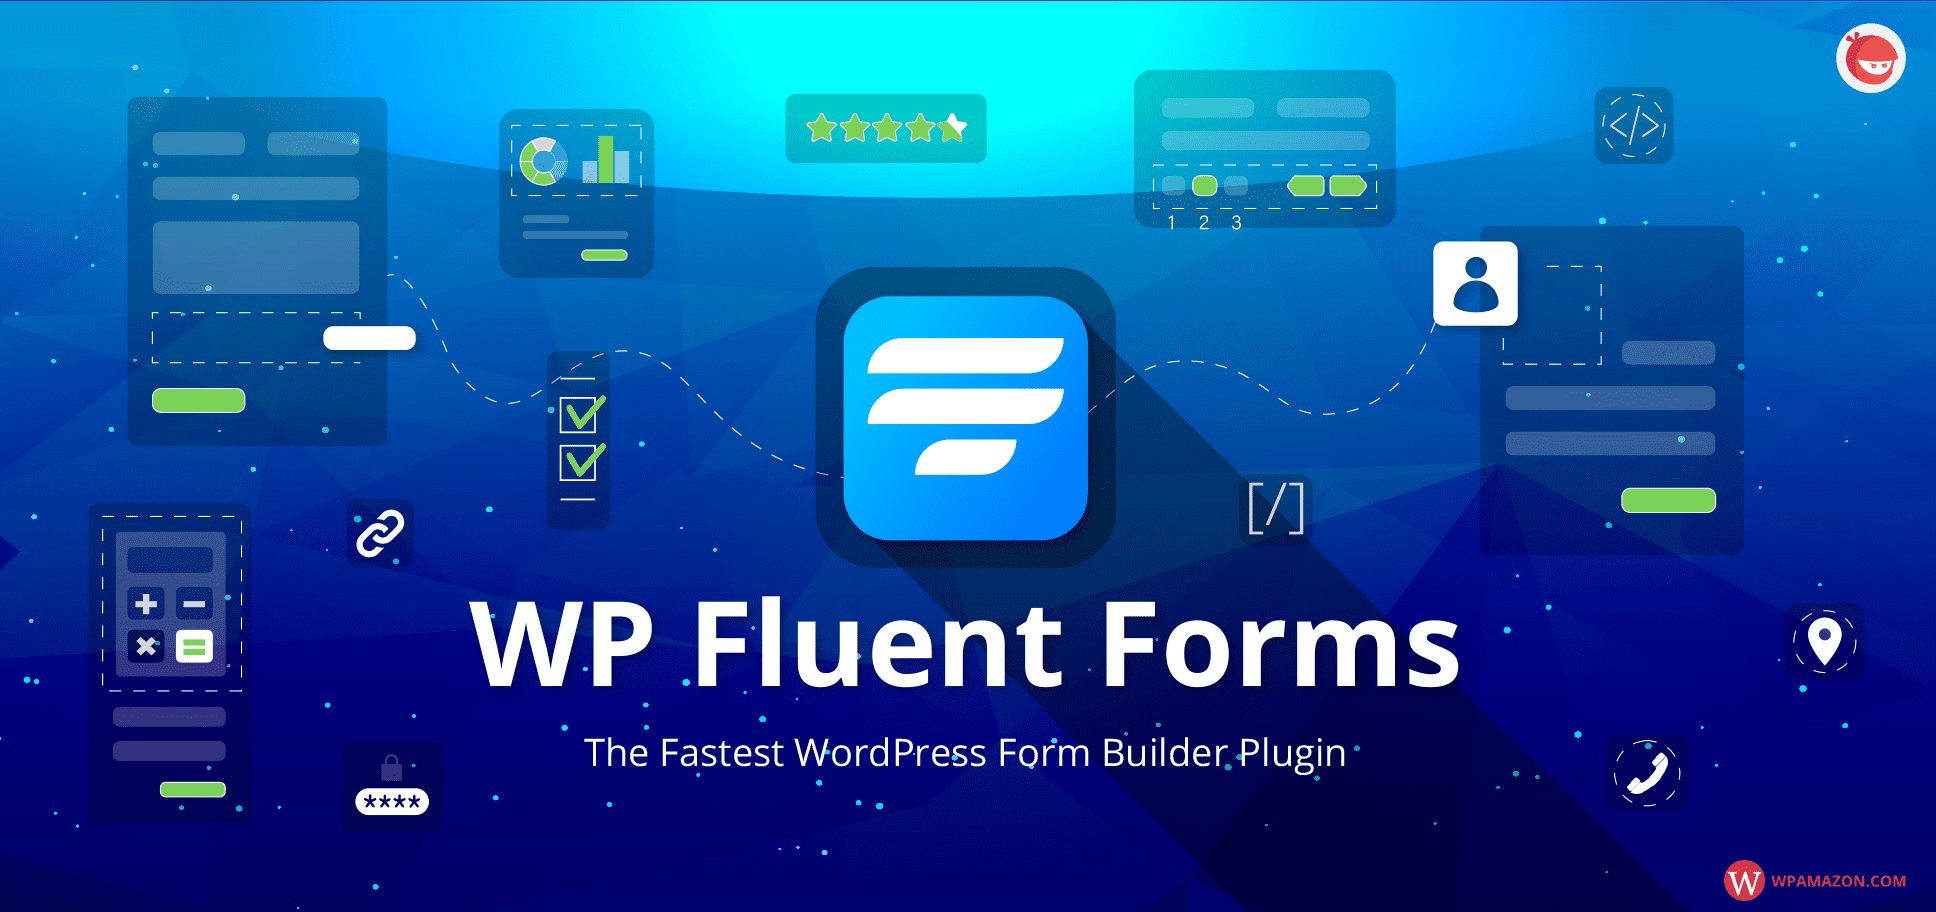 WP Fluent Forms Pro Add-On v4.3.7